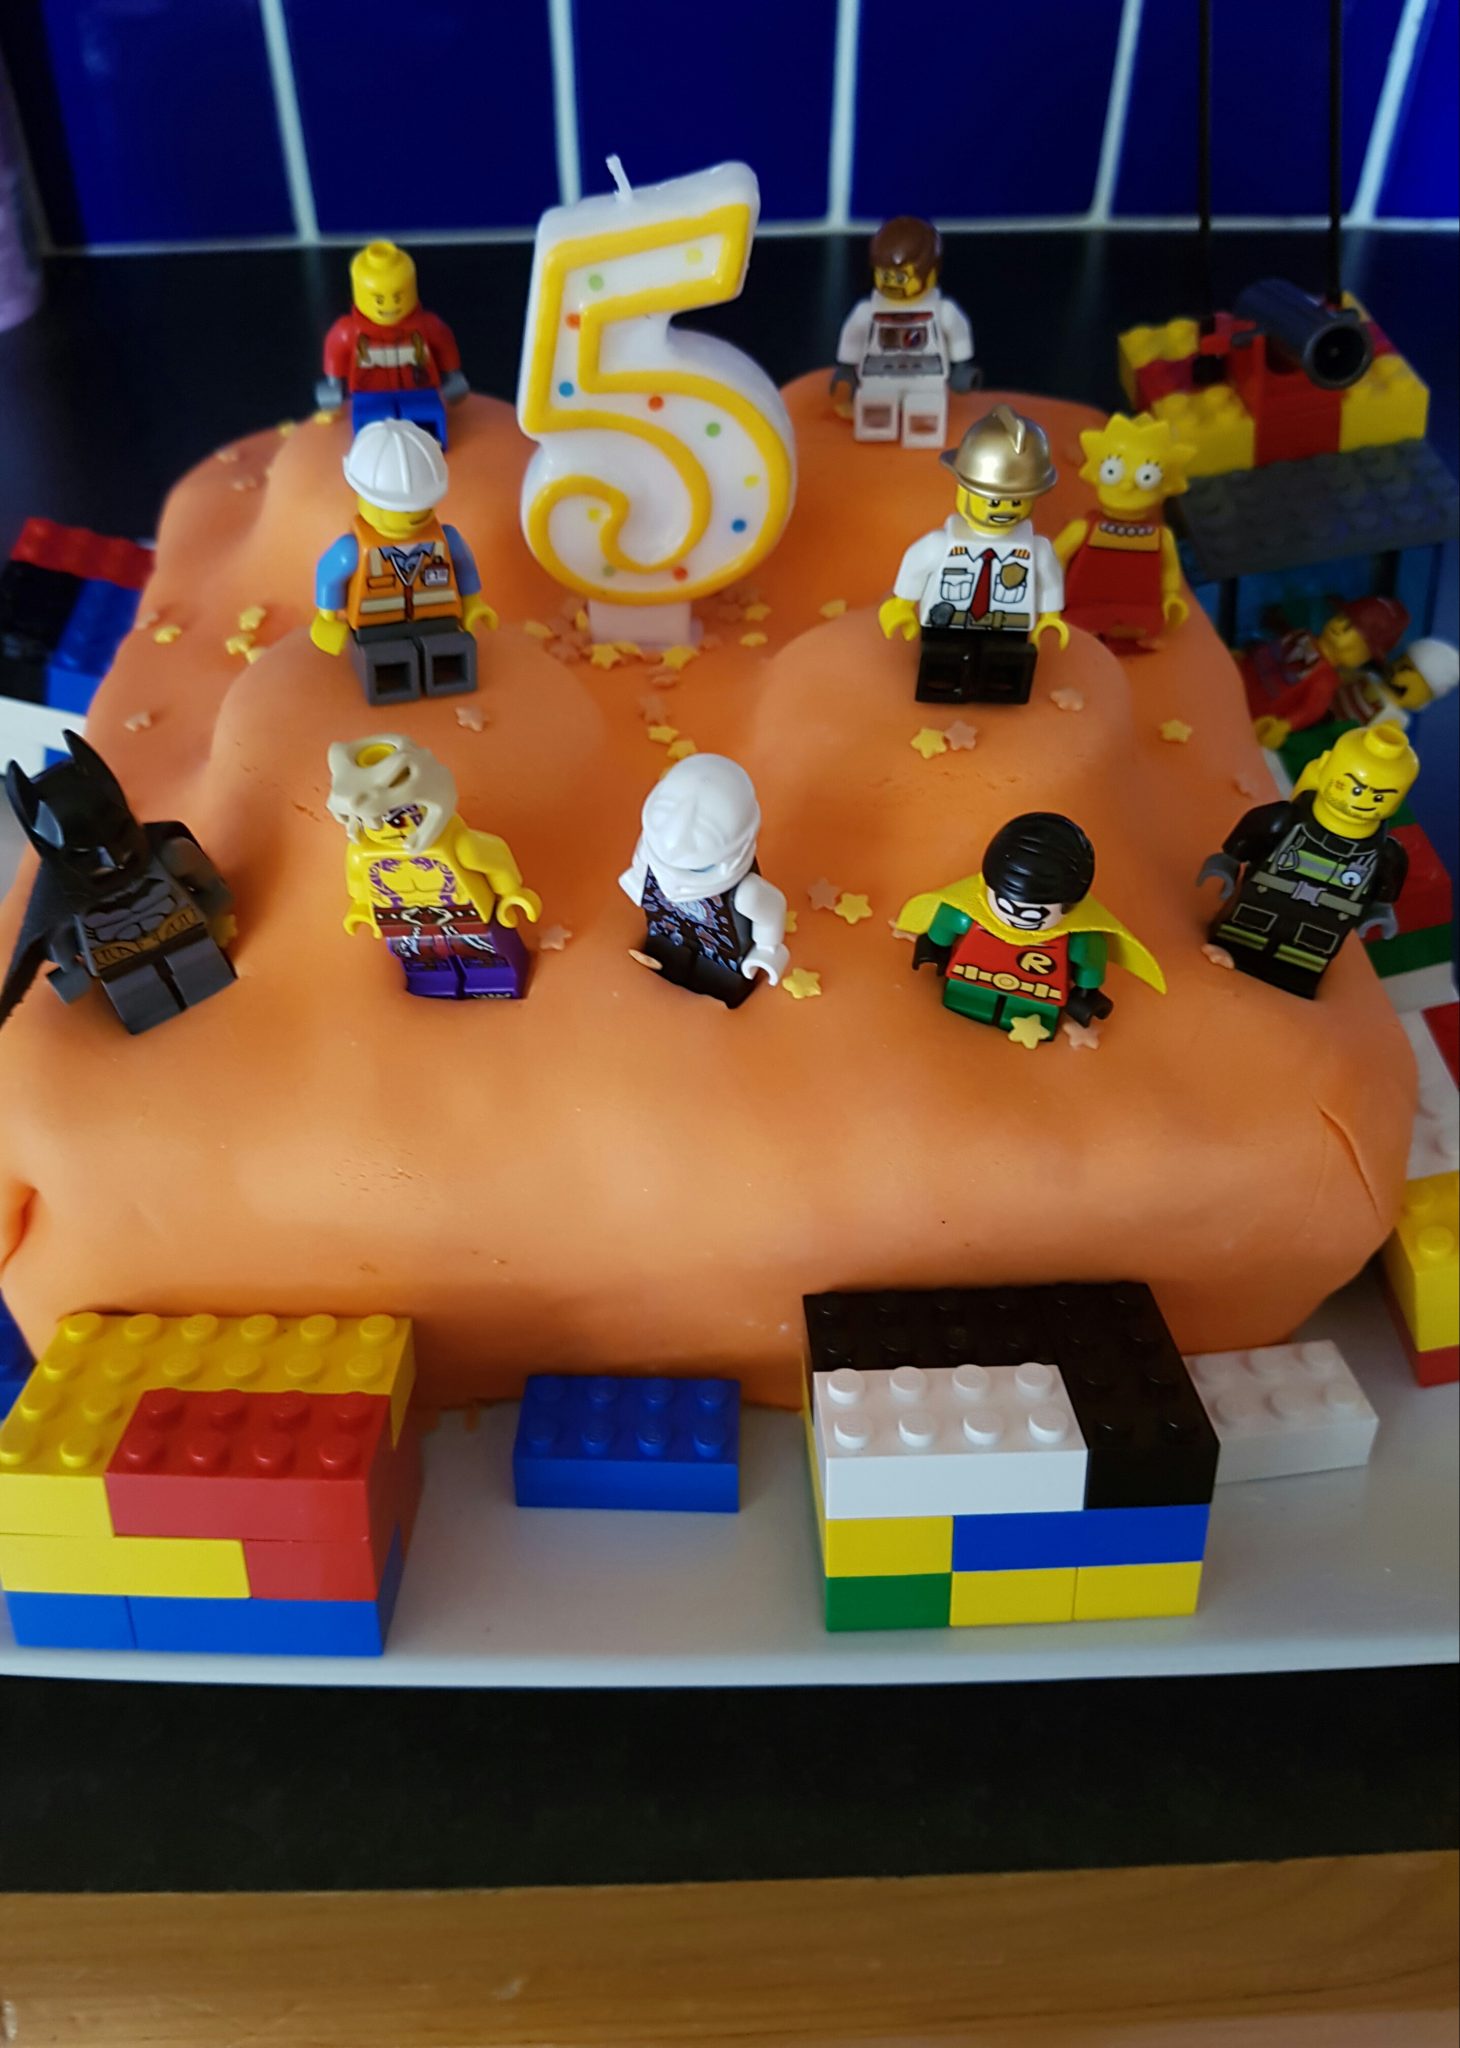 Lego Construction - Decorated Cake by Sweetb - CakesDecor